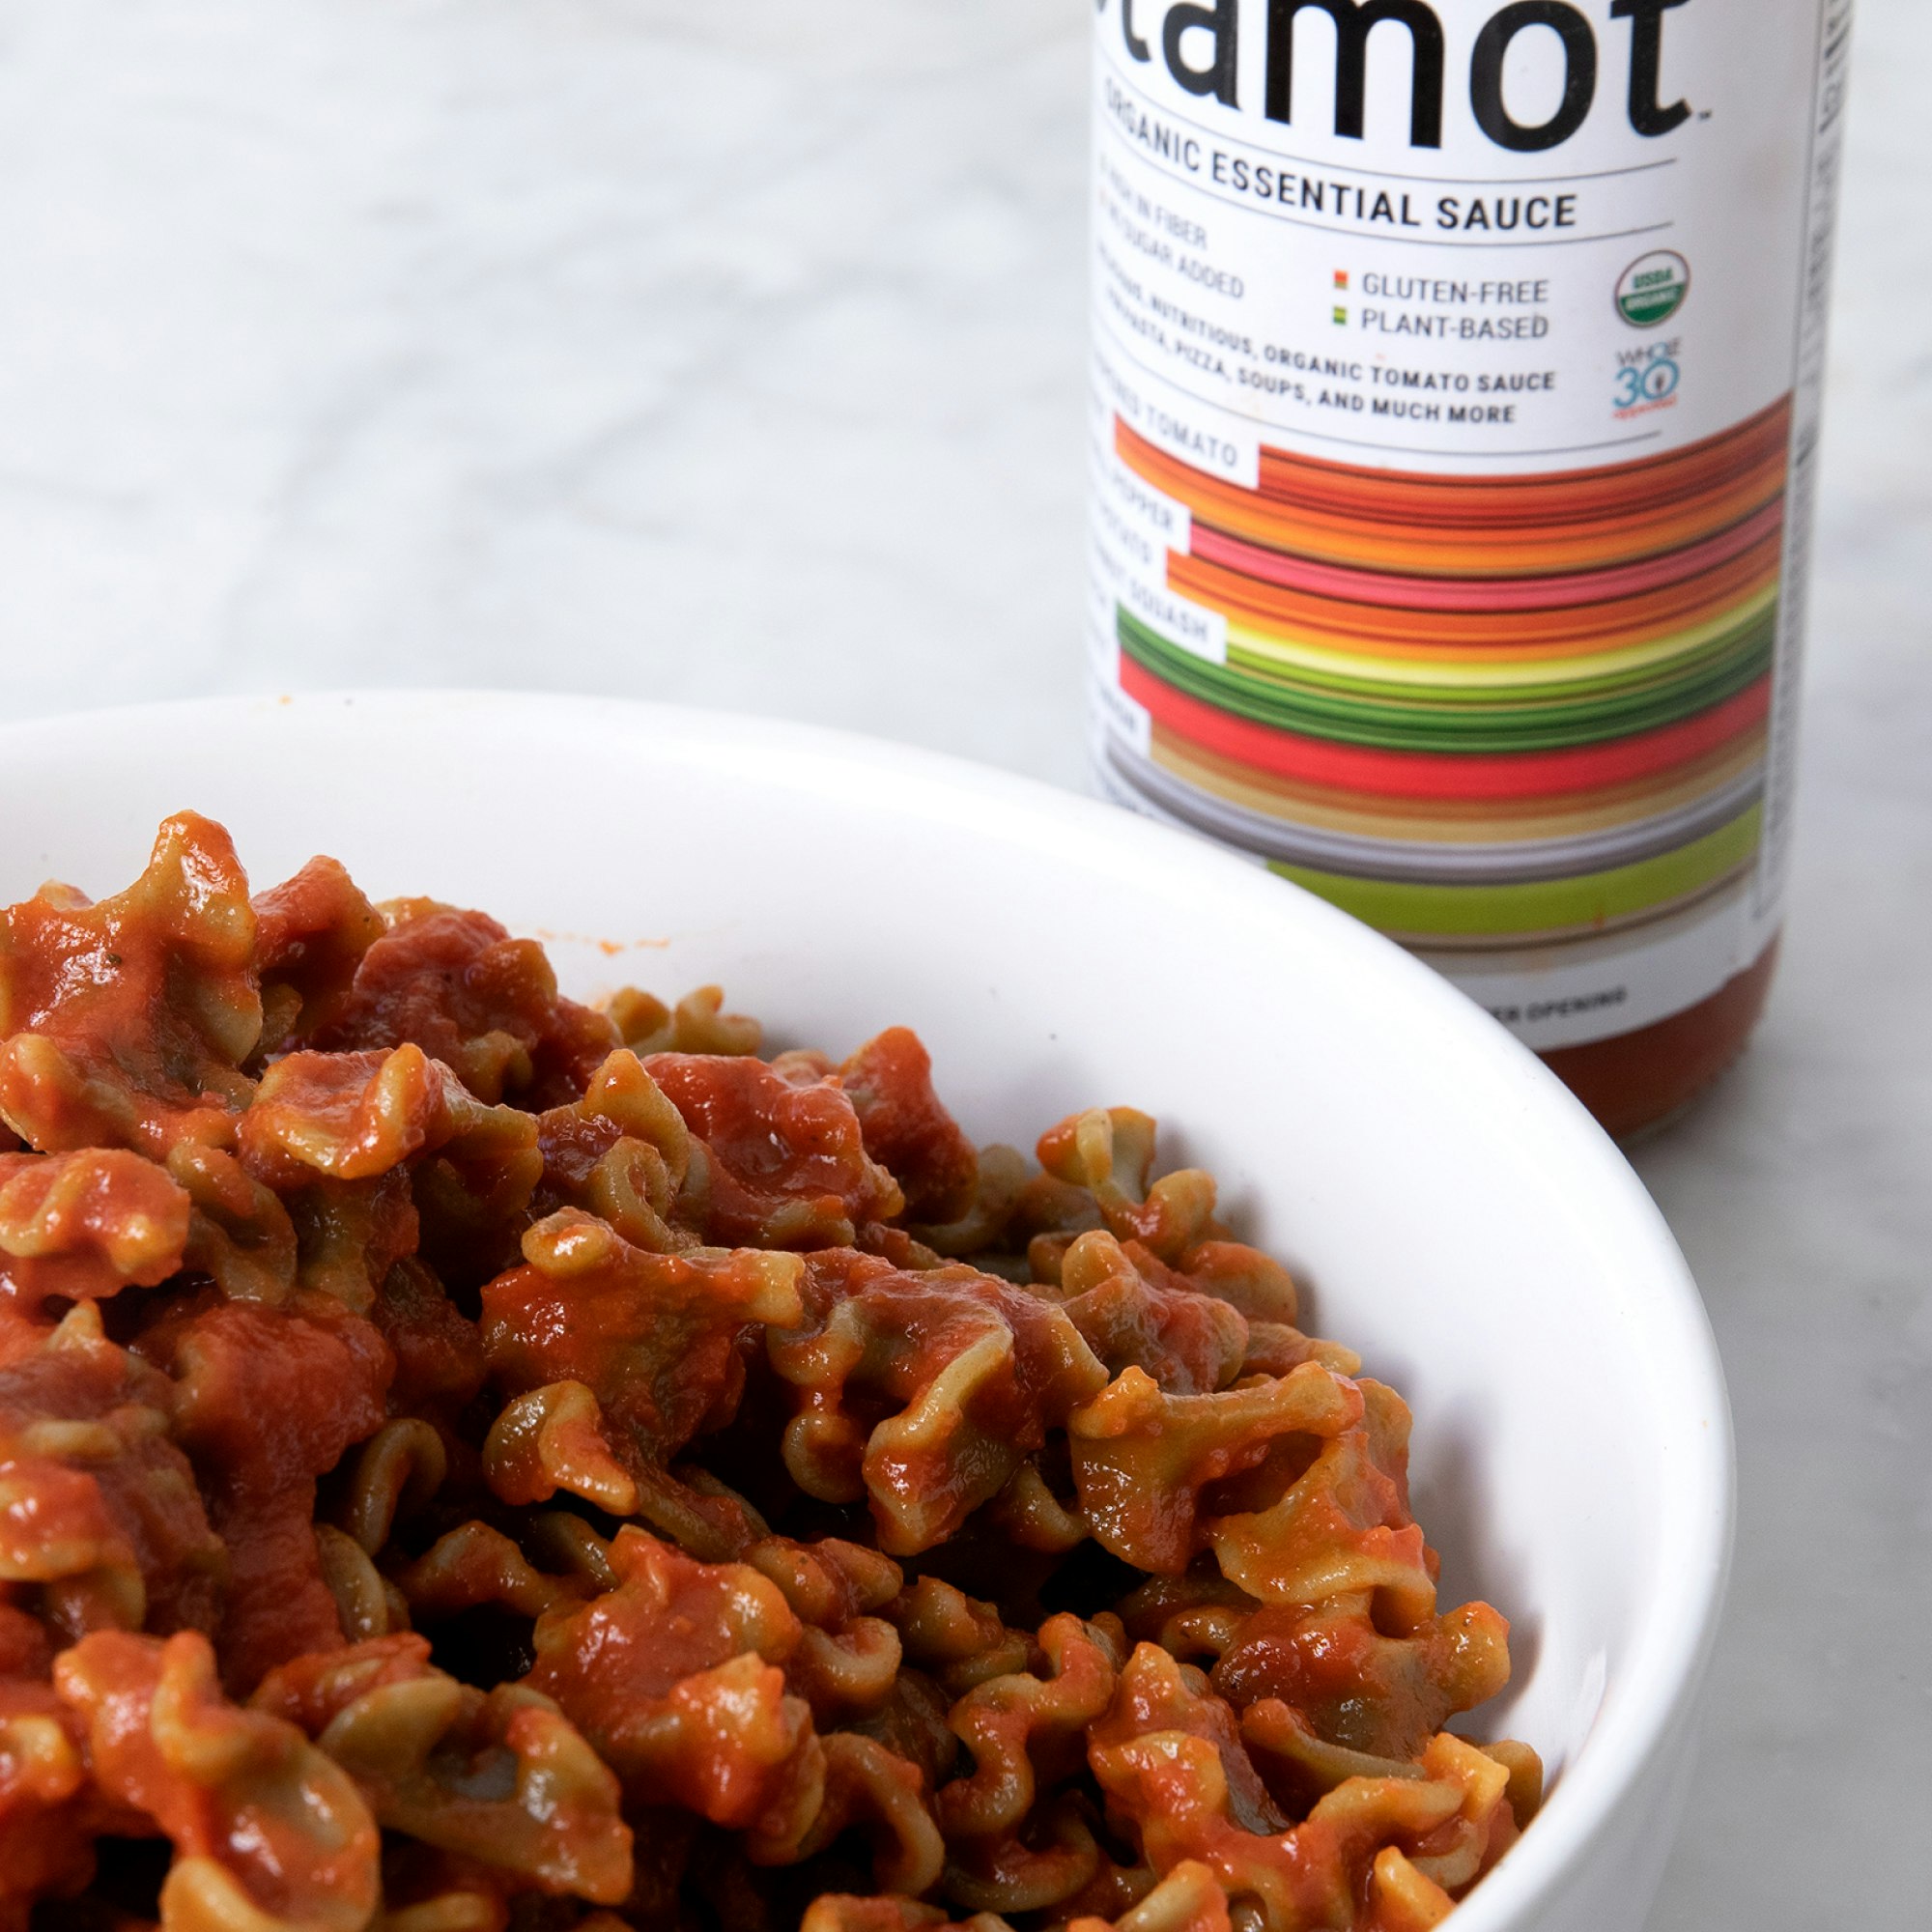 otamot organic essential sauce specialty foods